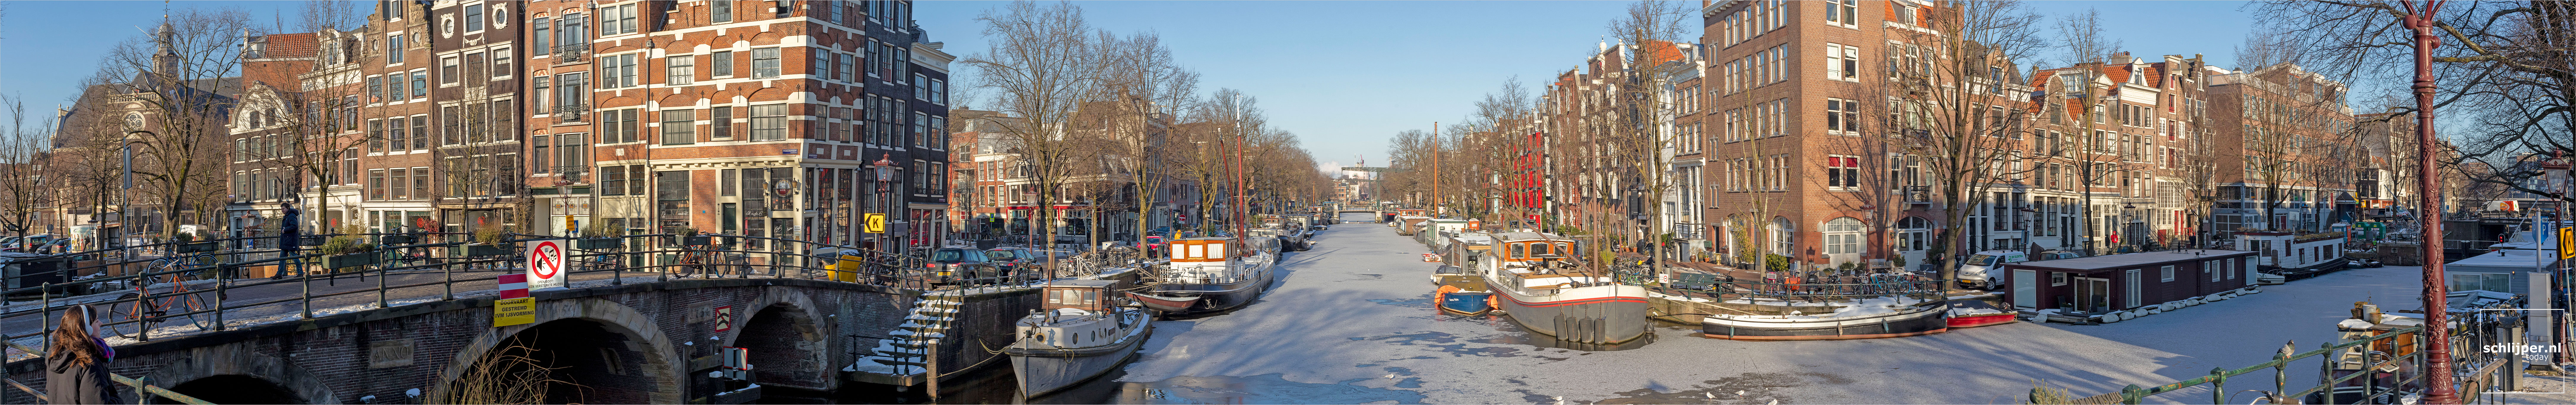 The Netherlands, Amsterdam, 12 februari 2021